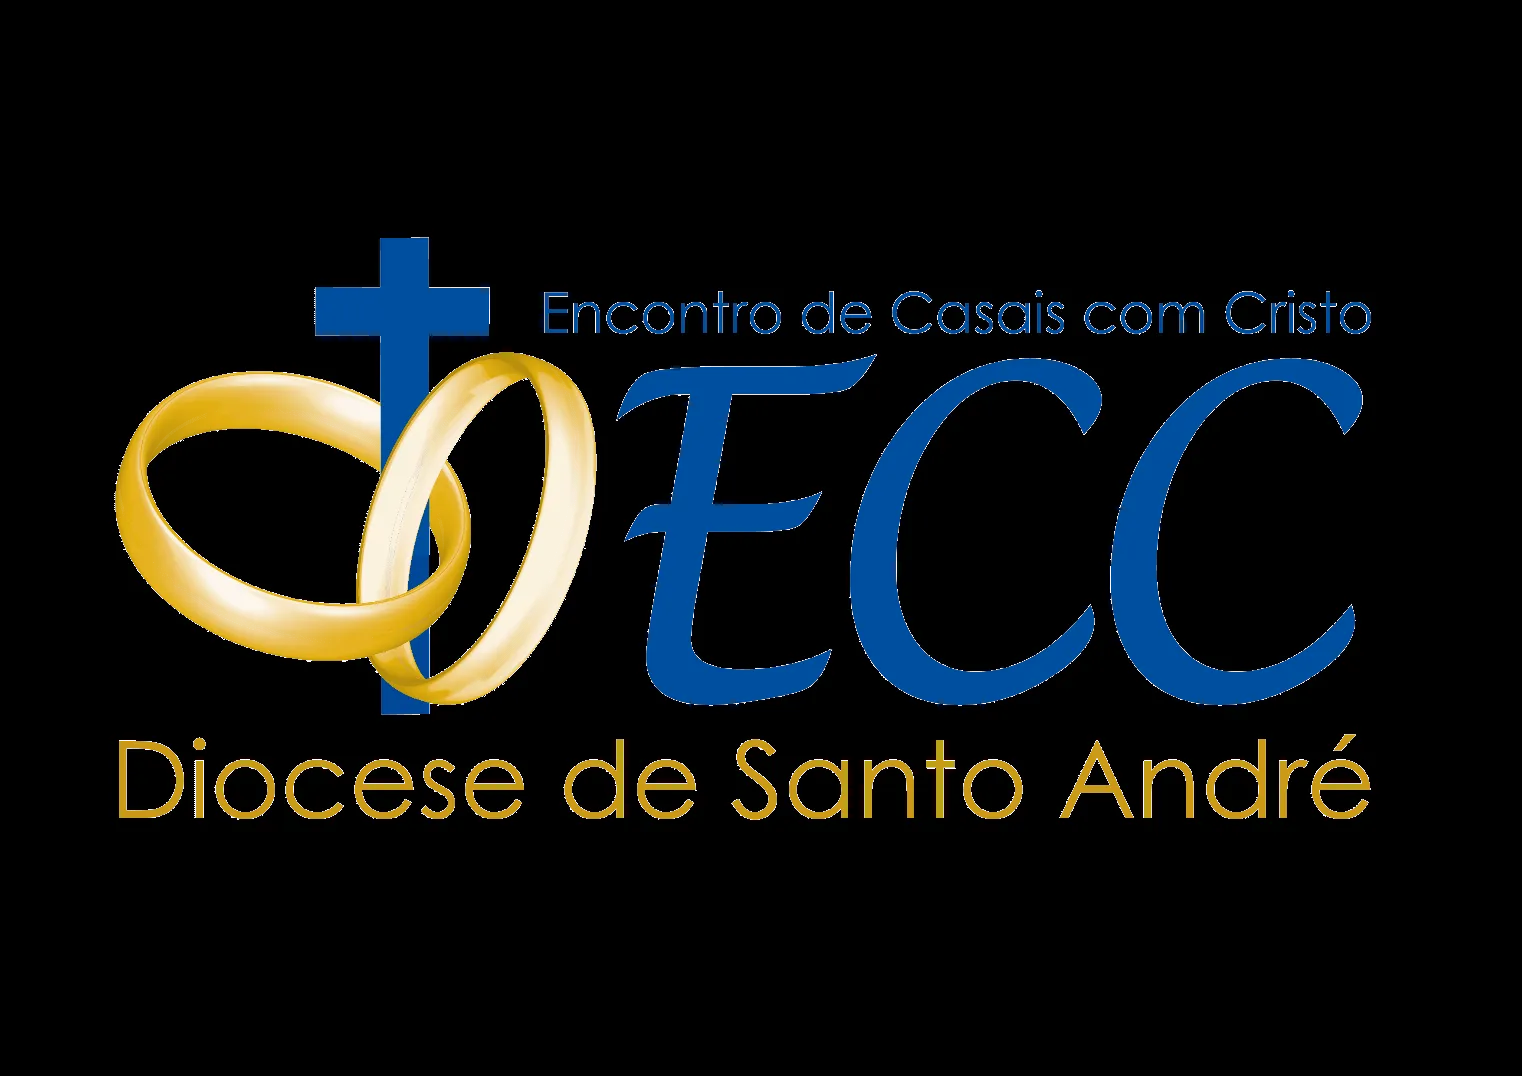 Missa de Envio dos casais do ECC ocorre no dia 5 de dezembro - Diocese de  Santo André